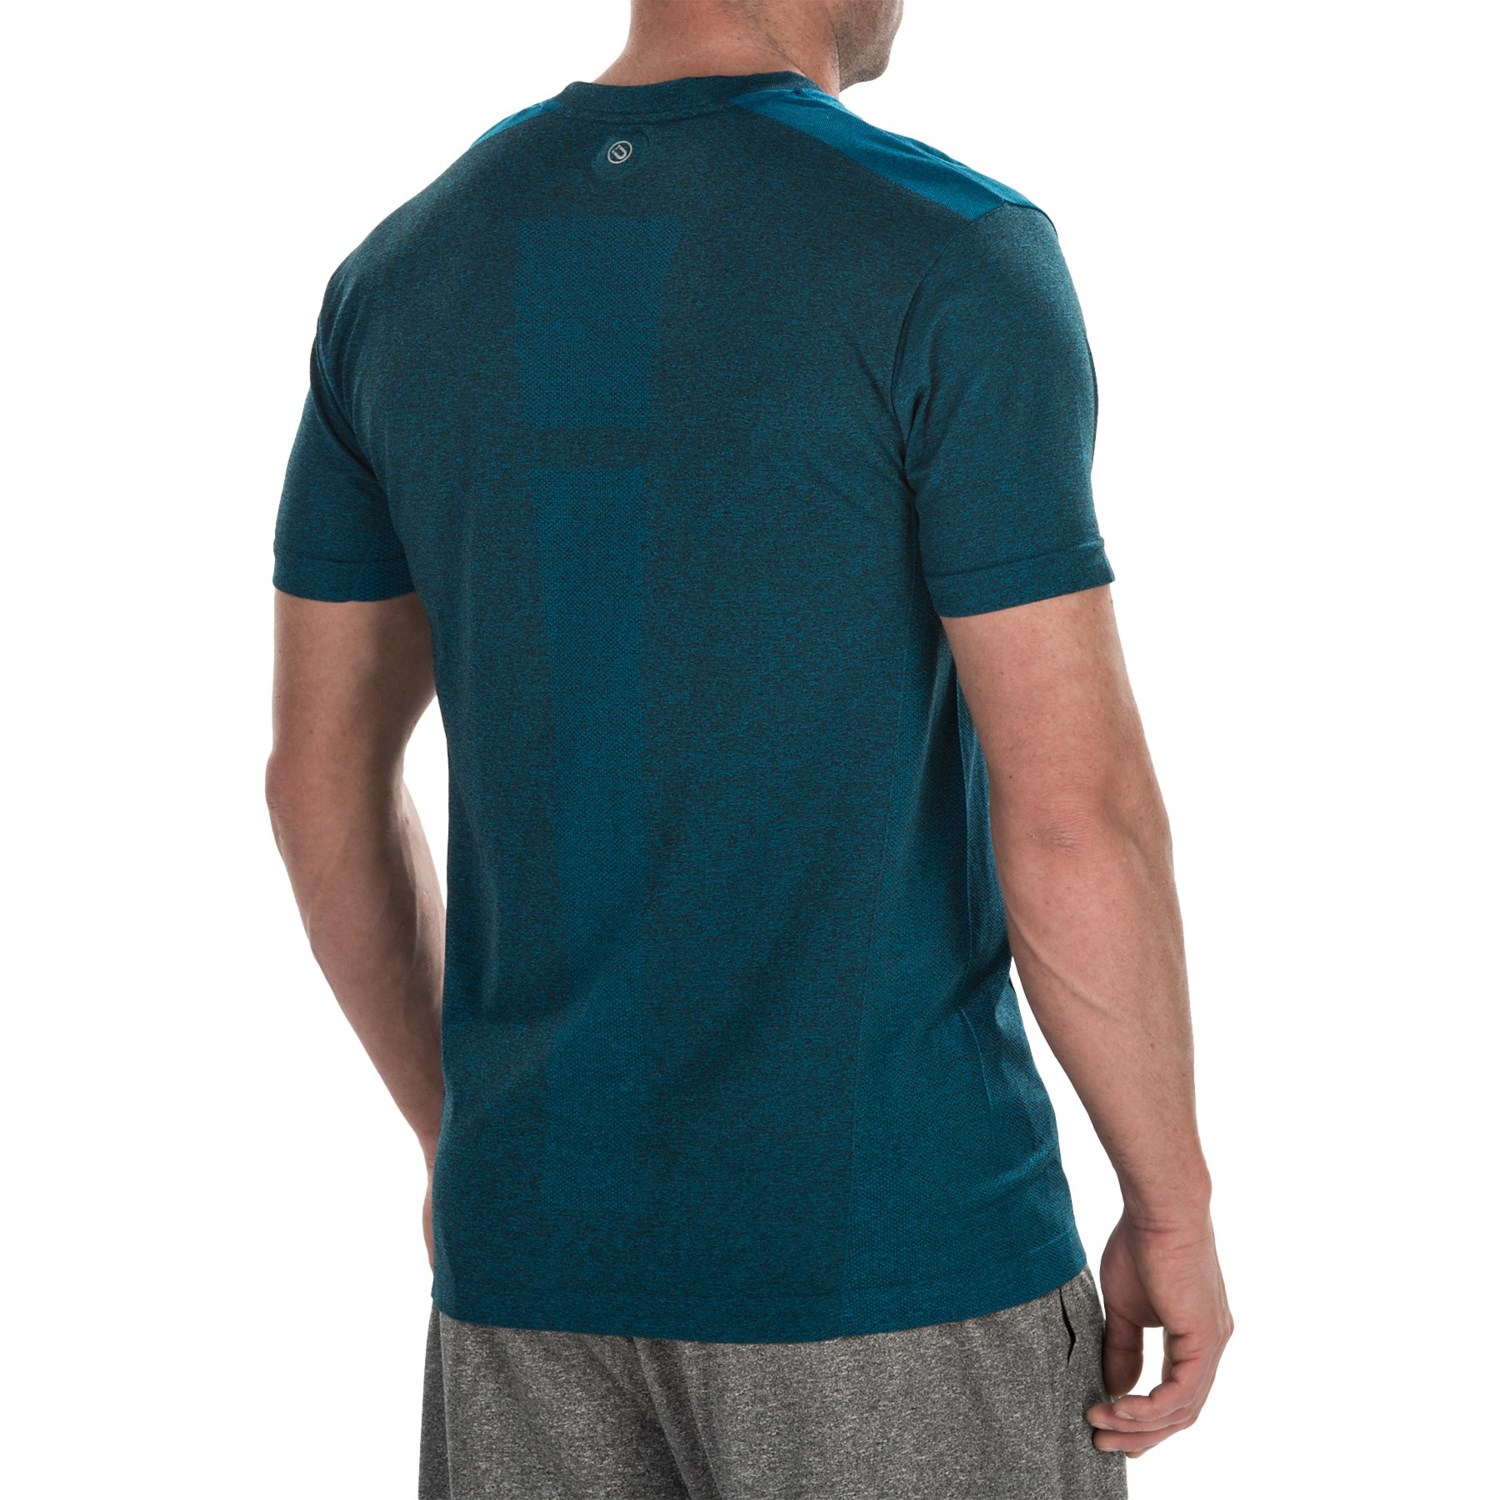 AL1VE Seamless Running Shirt (For Men) - Save 80%